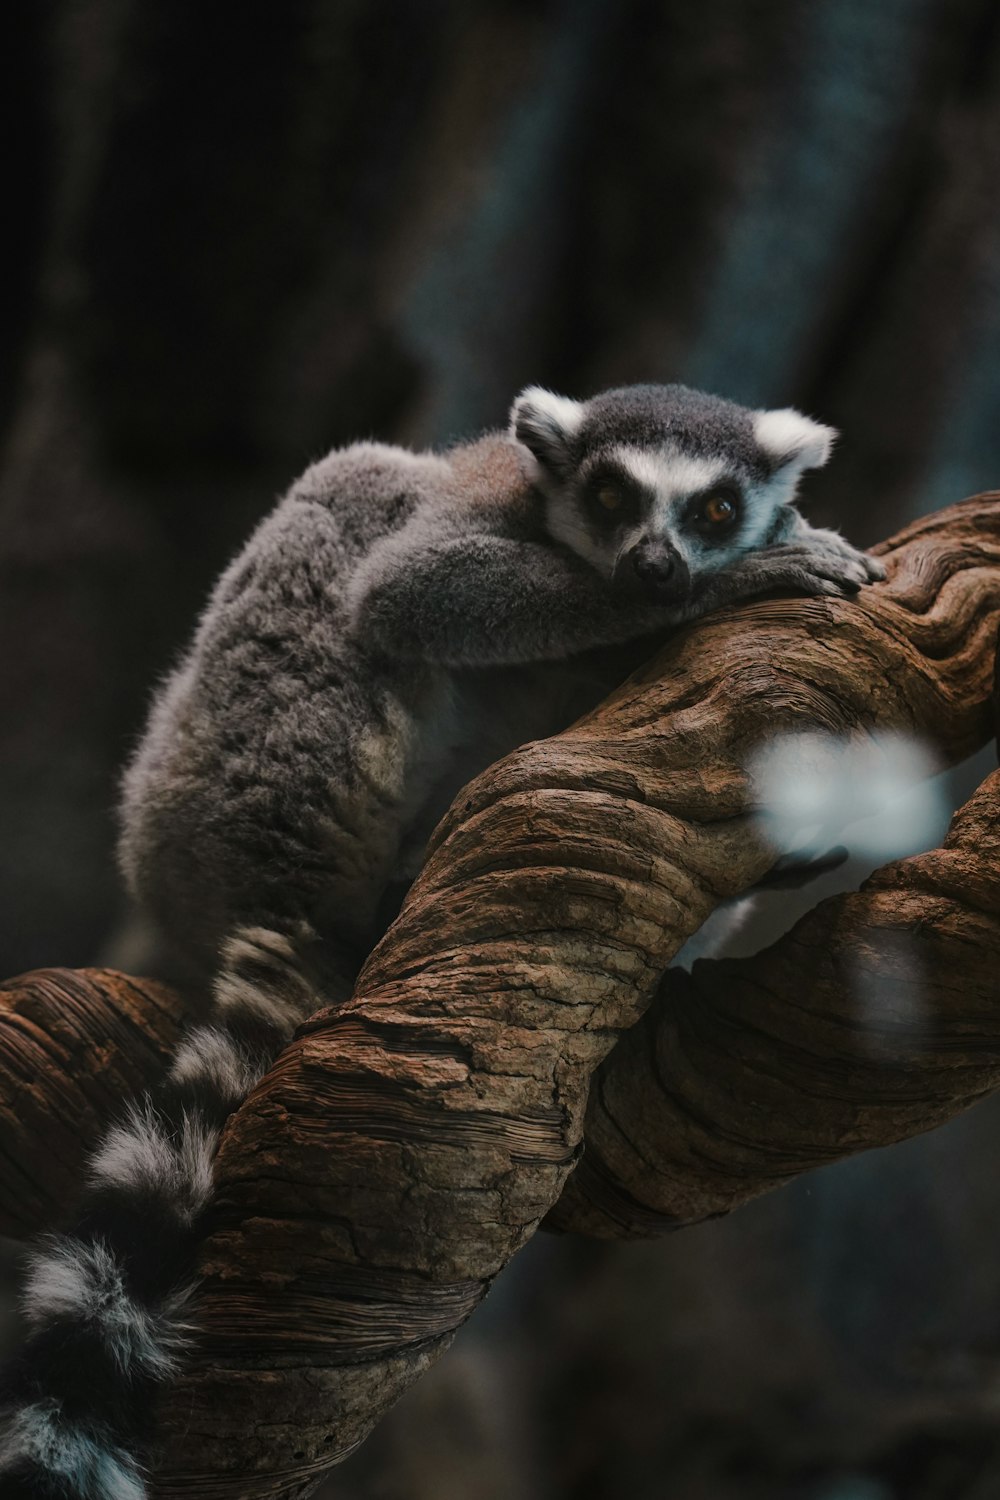 a lemur on a tree branch